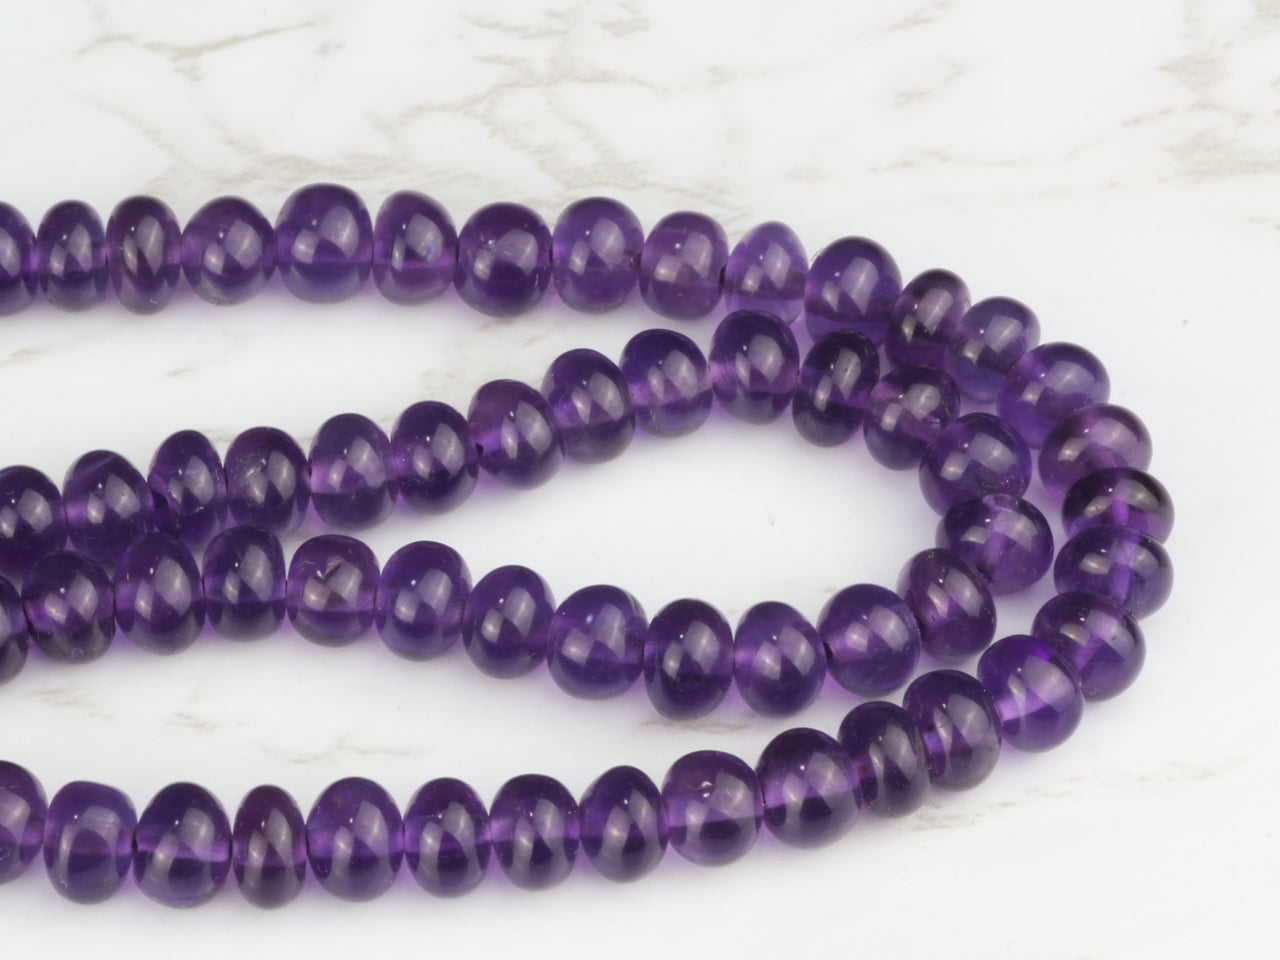 Purple Amethyst 5mm - 6mm Smooth Rondelles Bead Strand